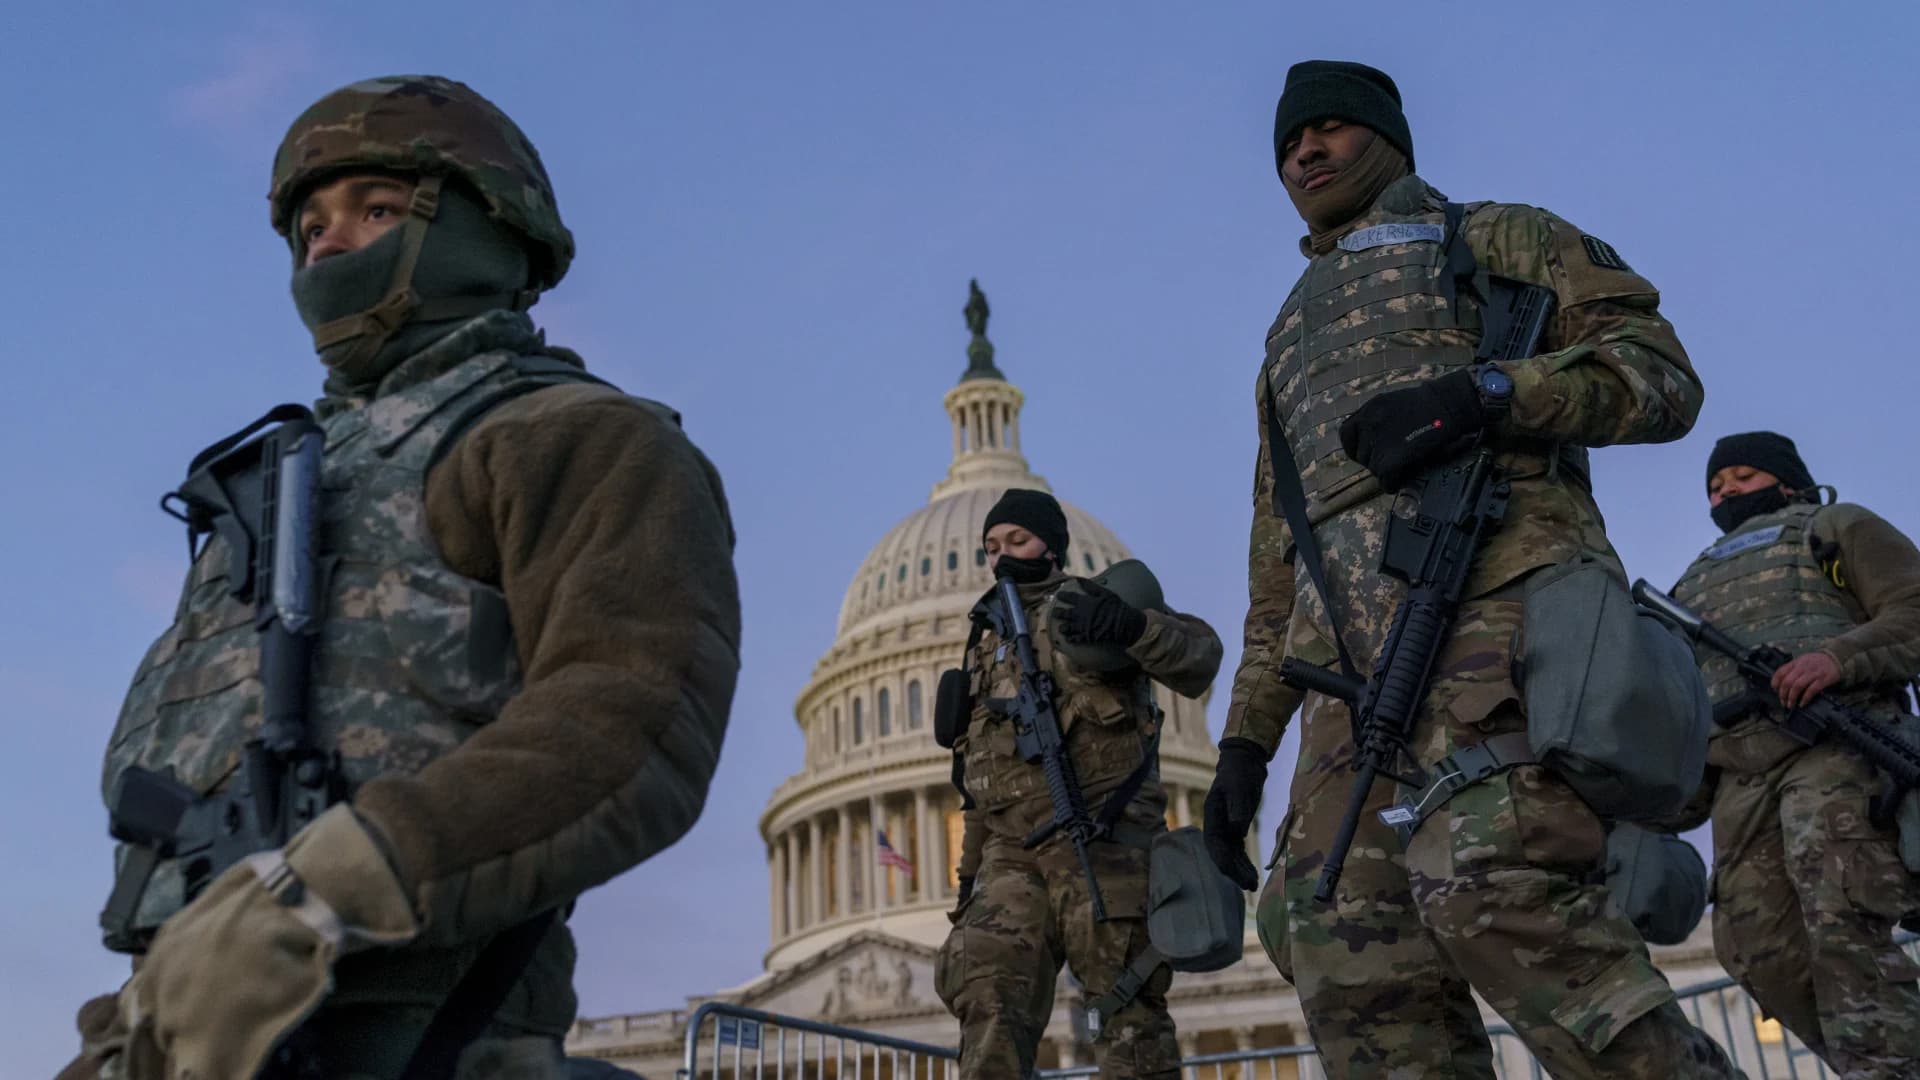 PHOTOS: Joe Biden's inauguration sees intense levels of security